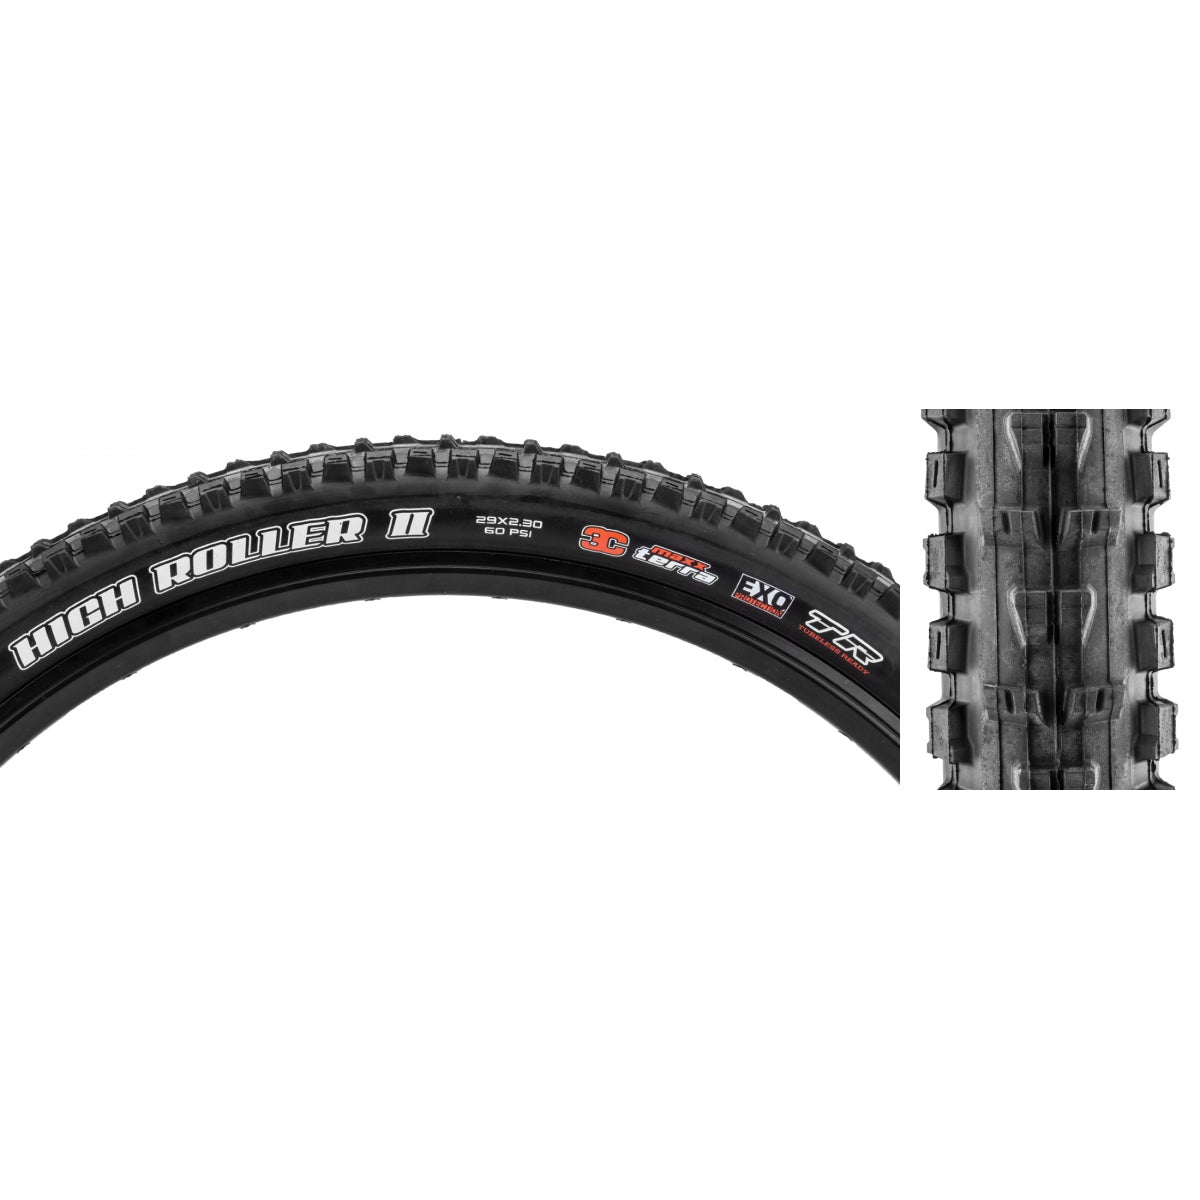 Tire Max Highroller Ii 29X2.3 Black Fold/60 Tr/Exo/Terra